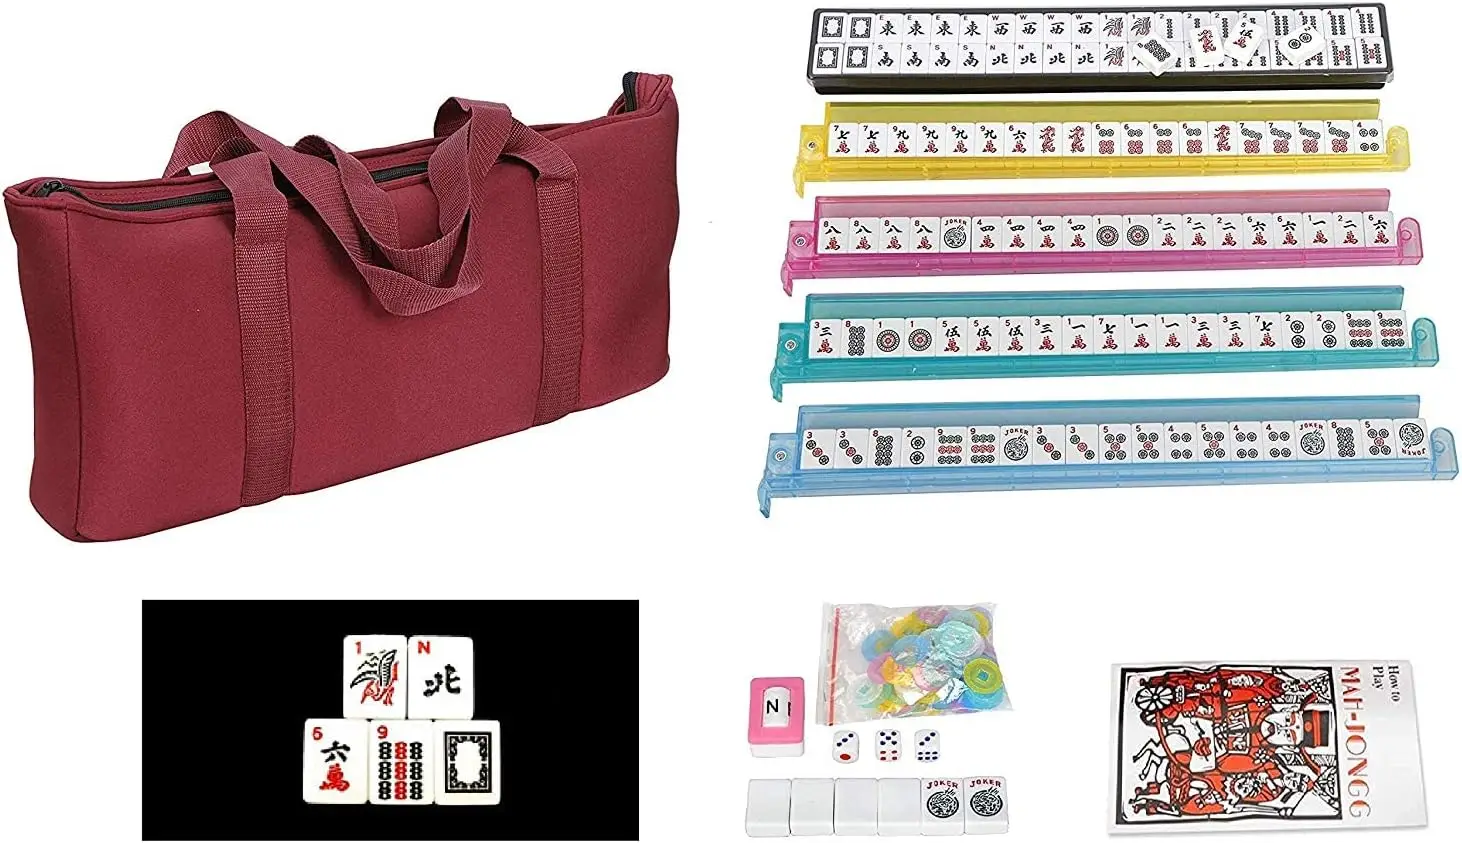 

American Mahjong Set - Red Burgundy Soft Bag - 166 White Engraved Tiles, 4 All-in-One Rack/Pushers Mah Jongg Game Set